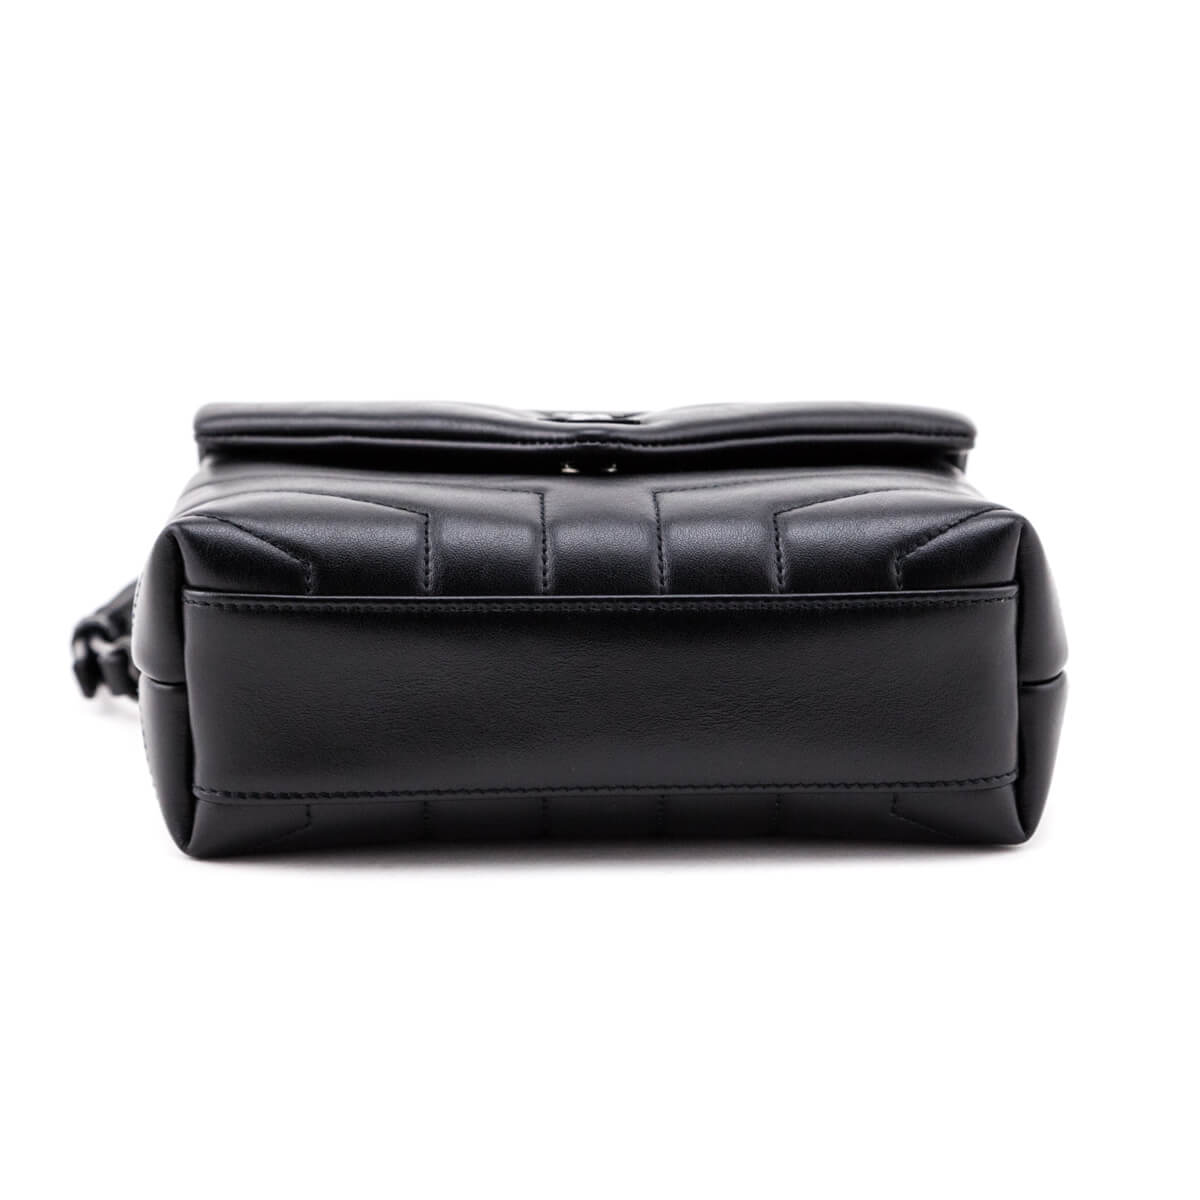 Buy Saint Laurent Loulou Toy Bag 'Nero' - 678401 DV708 1000